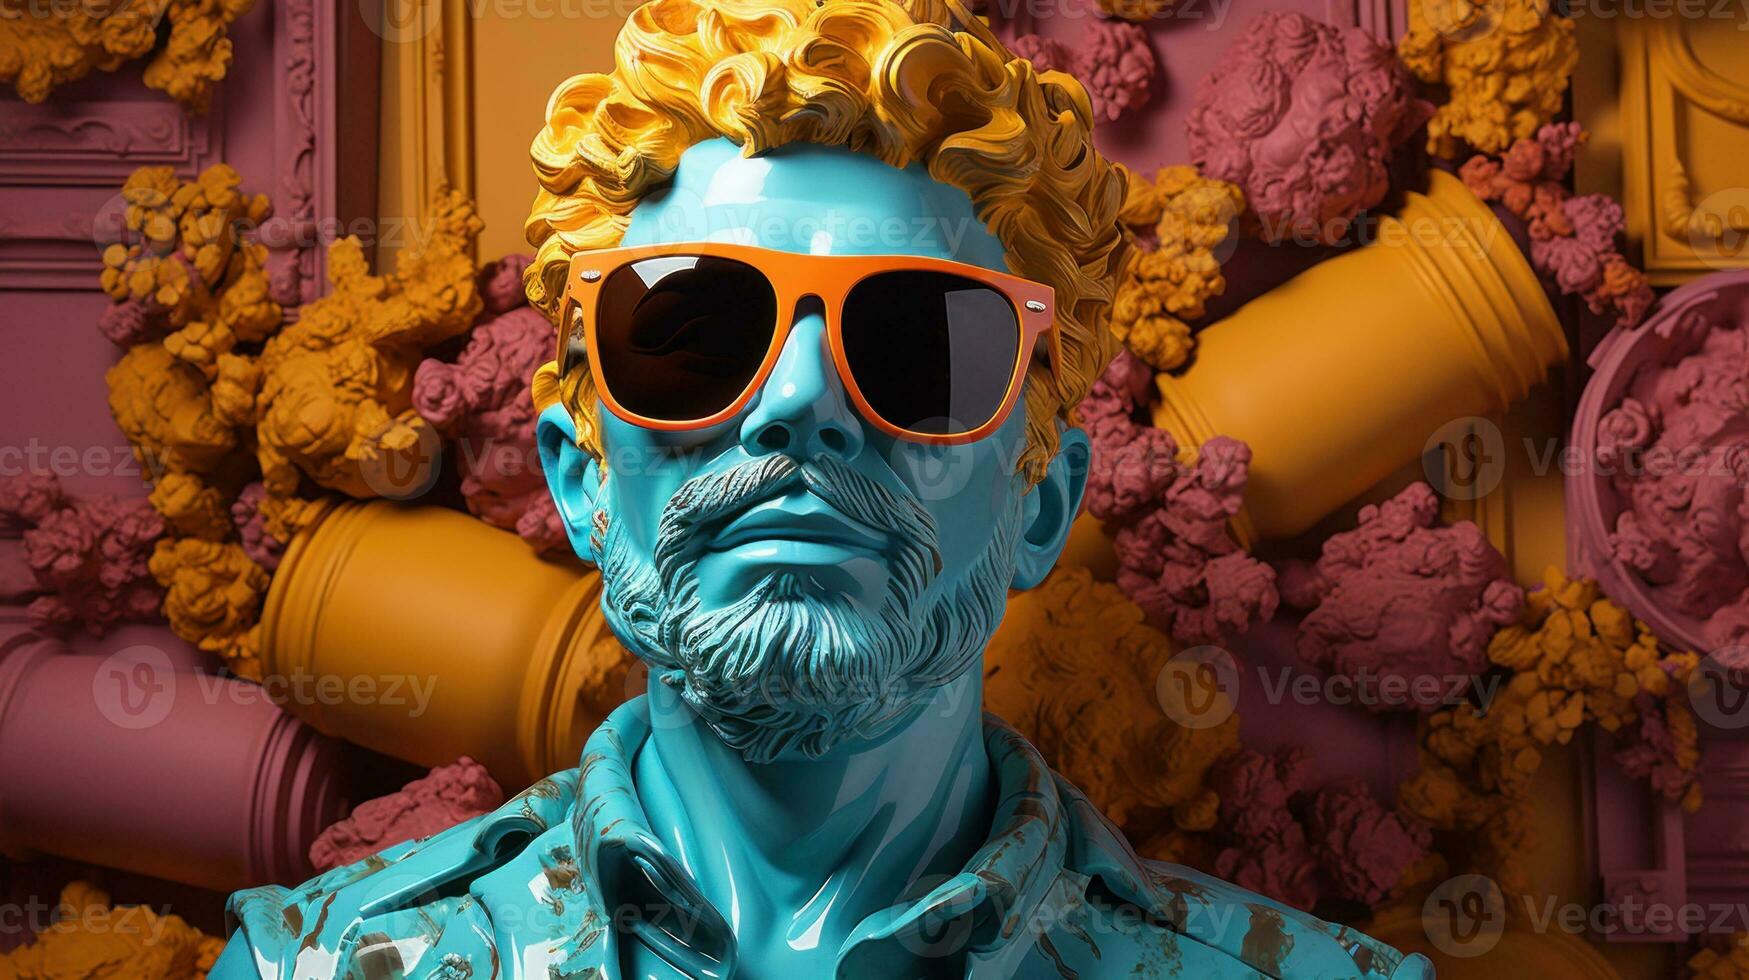 AI Generated A statue of a man with sunglasses and a beard, AI photo